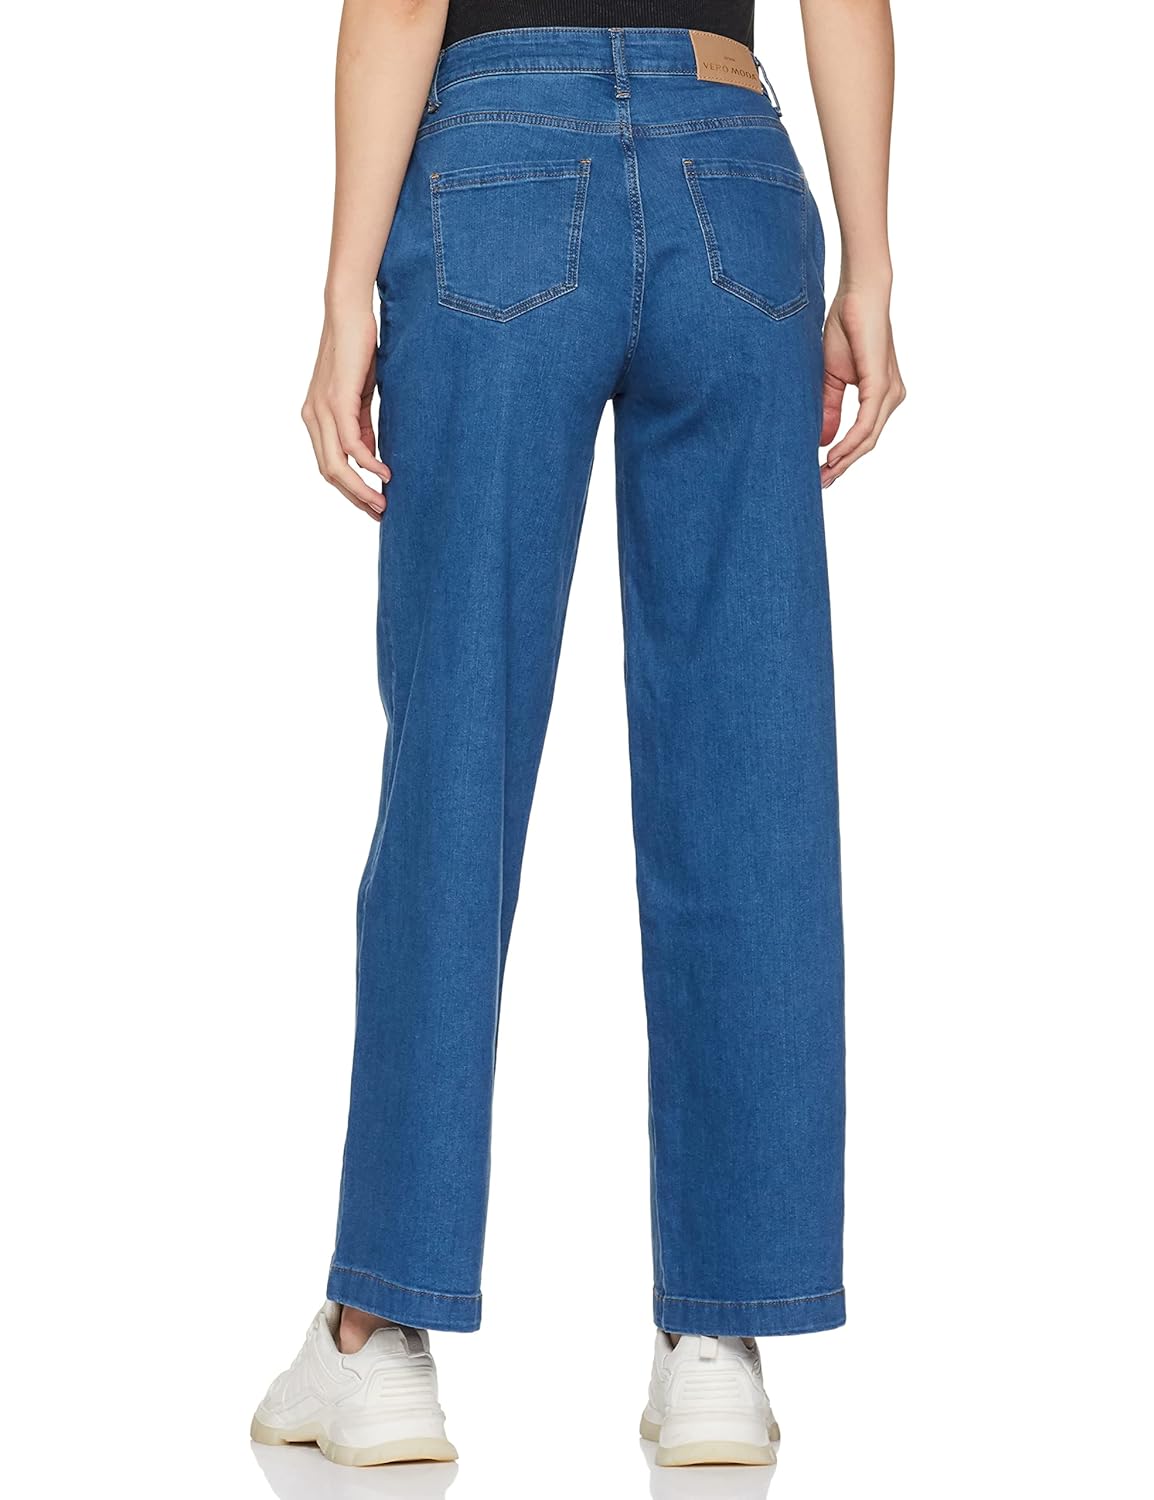 VERO MODA Women's Regular Jeans